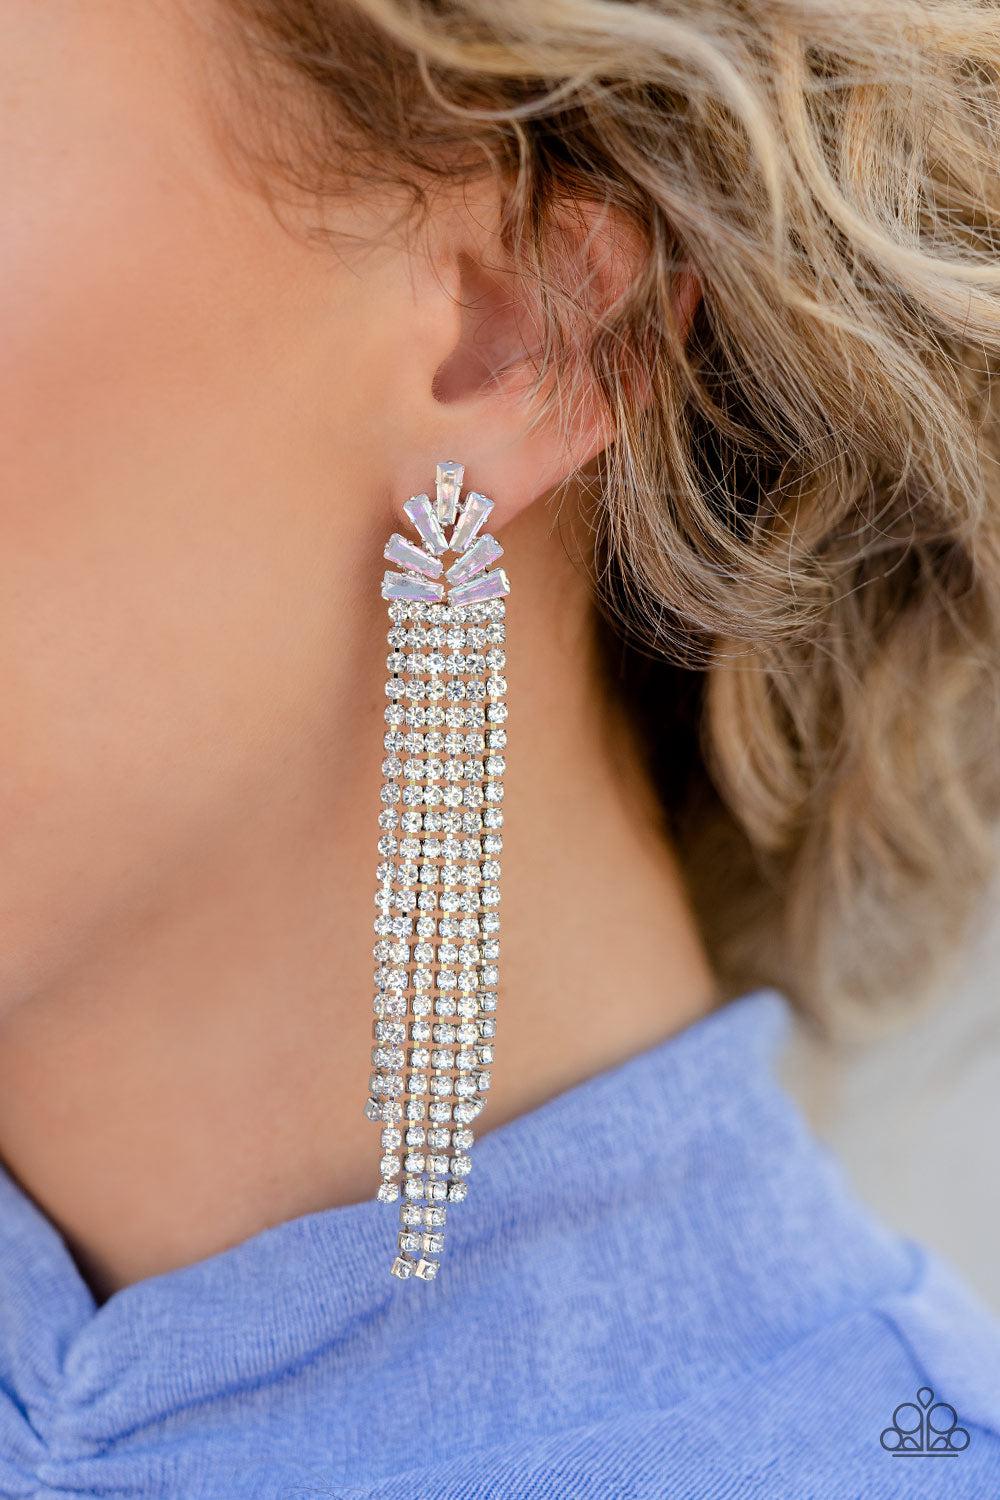 Overnight Sensation Multi Iridescent Rhinestone Earrings - Paparazzi Accessories- lightbox - CarasShop.com - $5 Jewelry by Cara Jewels